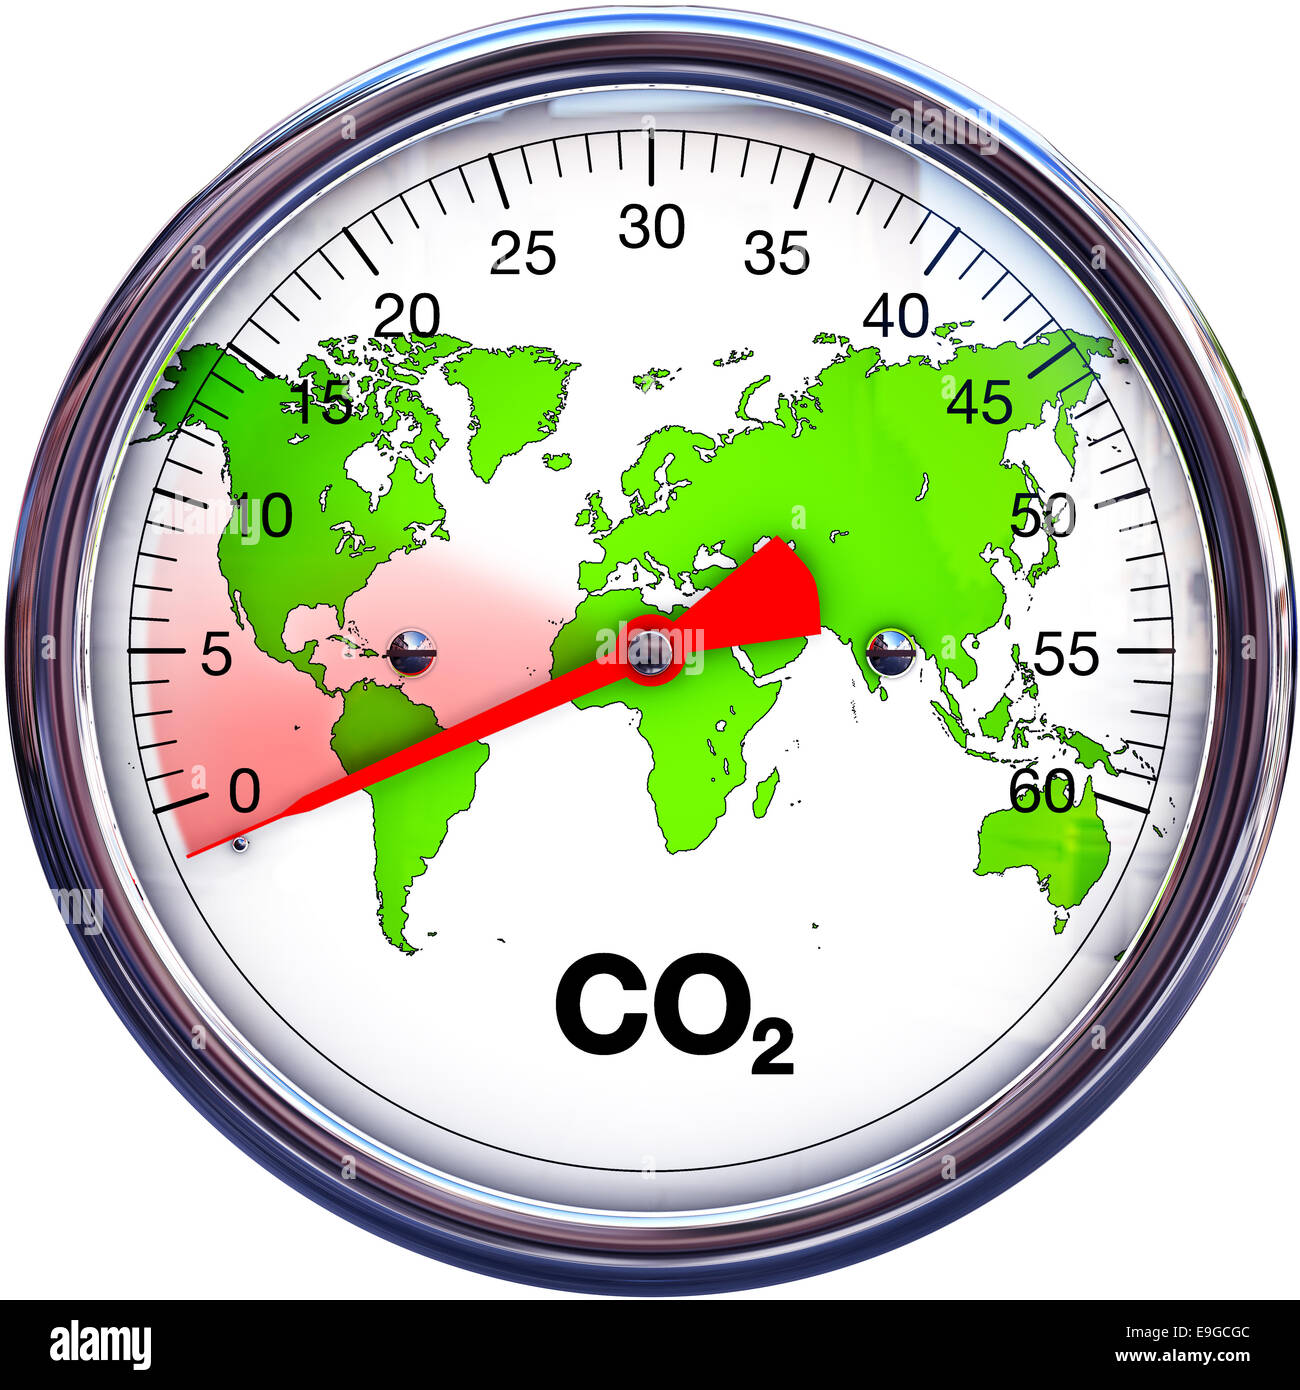 reduce CO2 Stock Photo